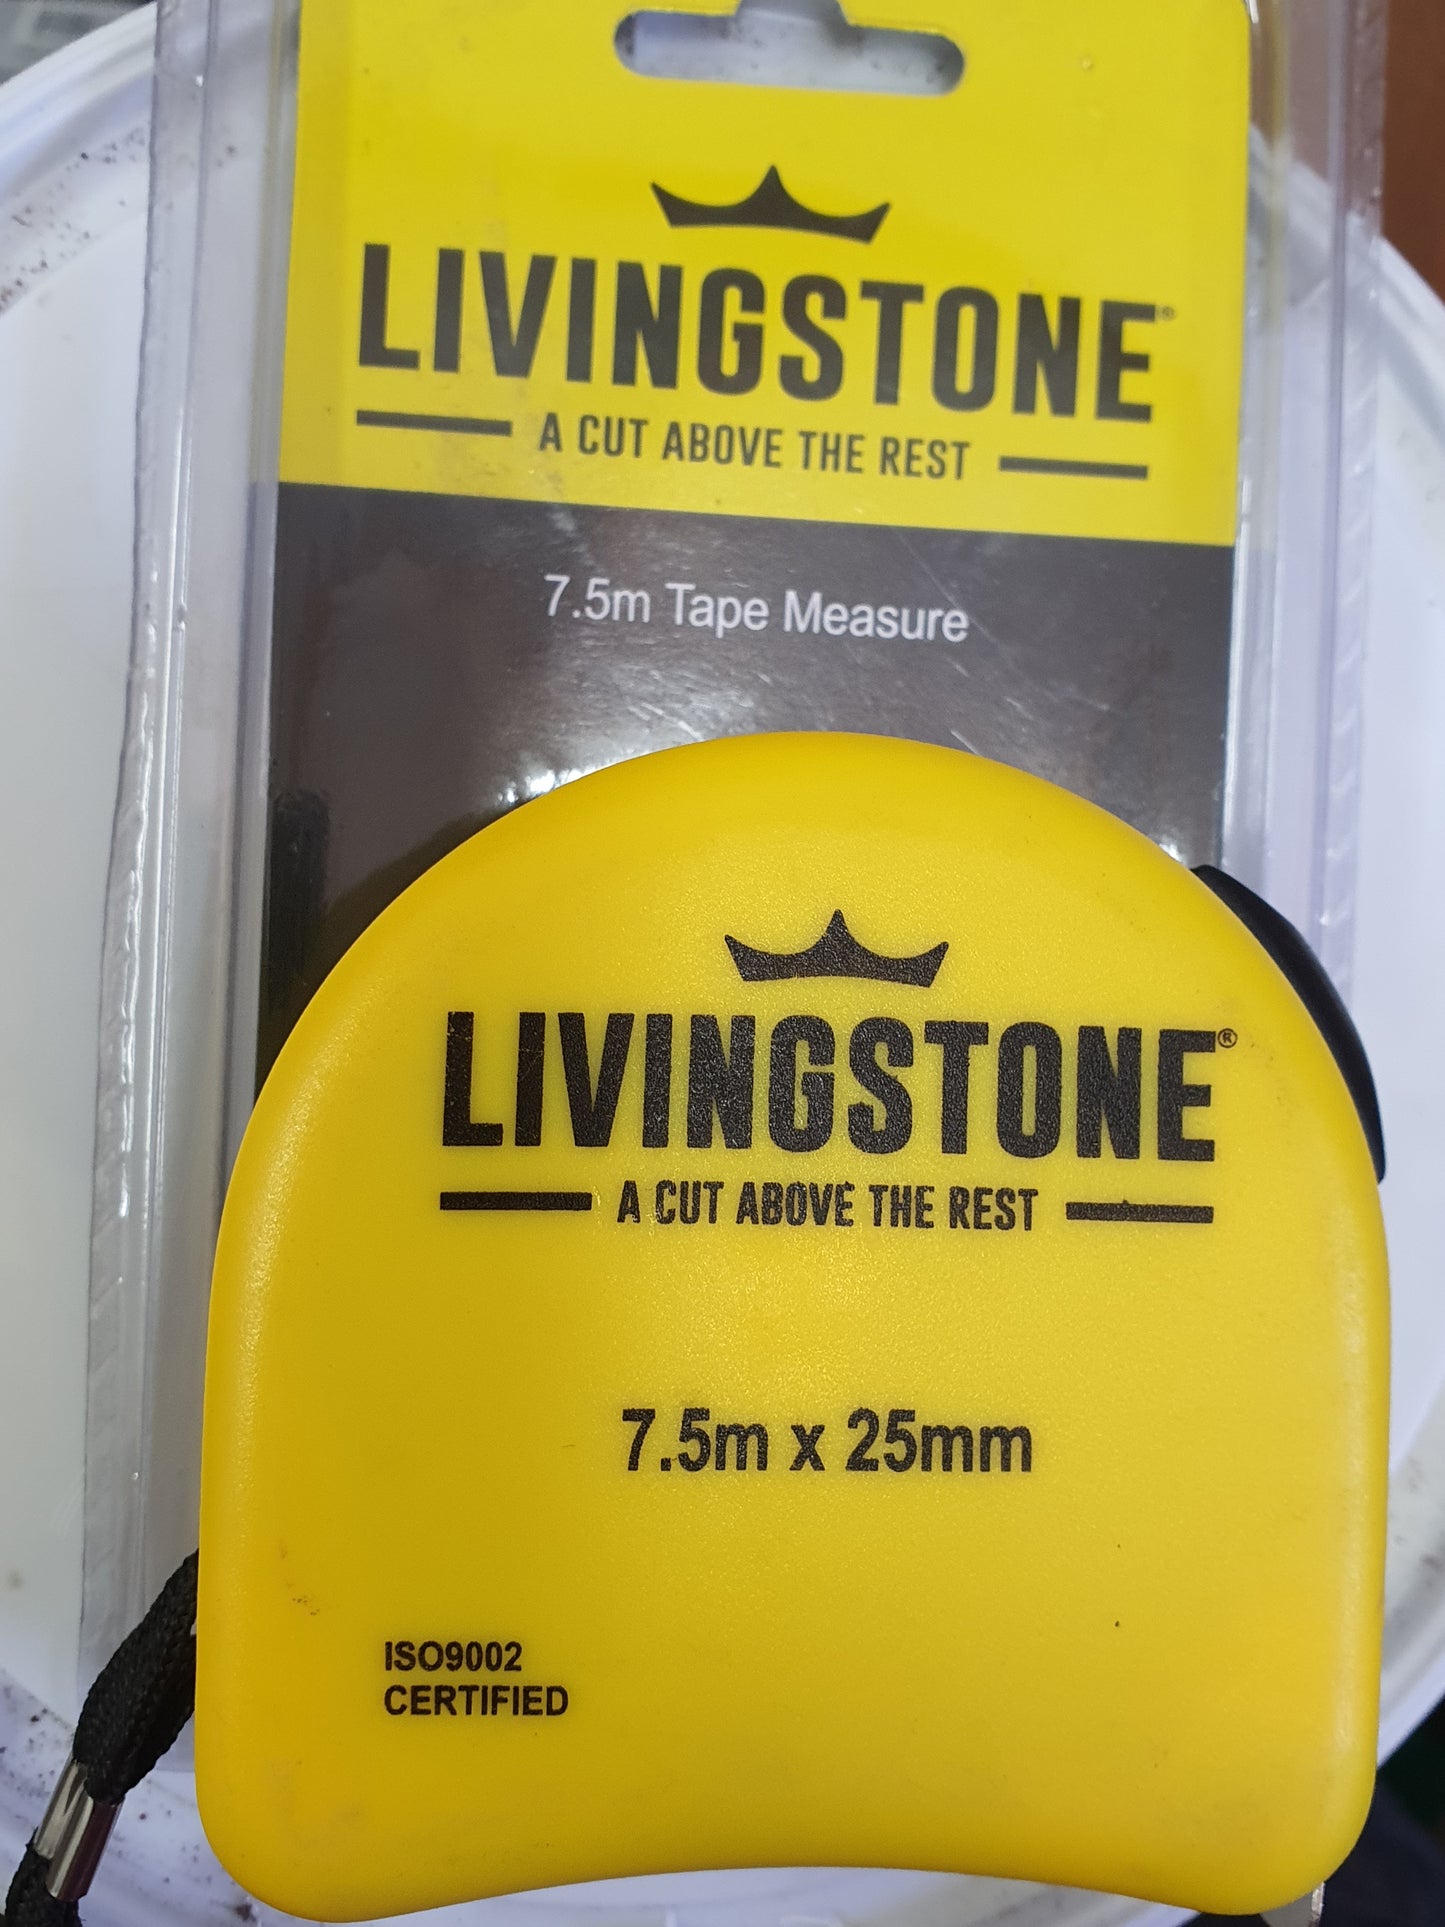 Livingstone tape measure 7.5m